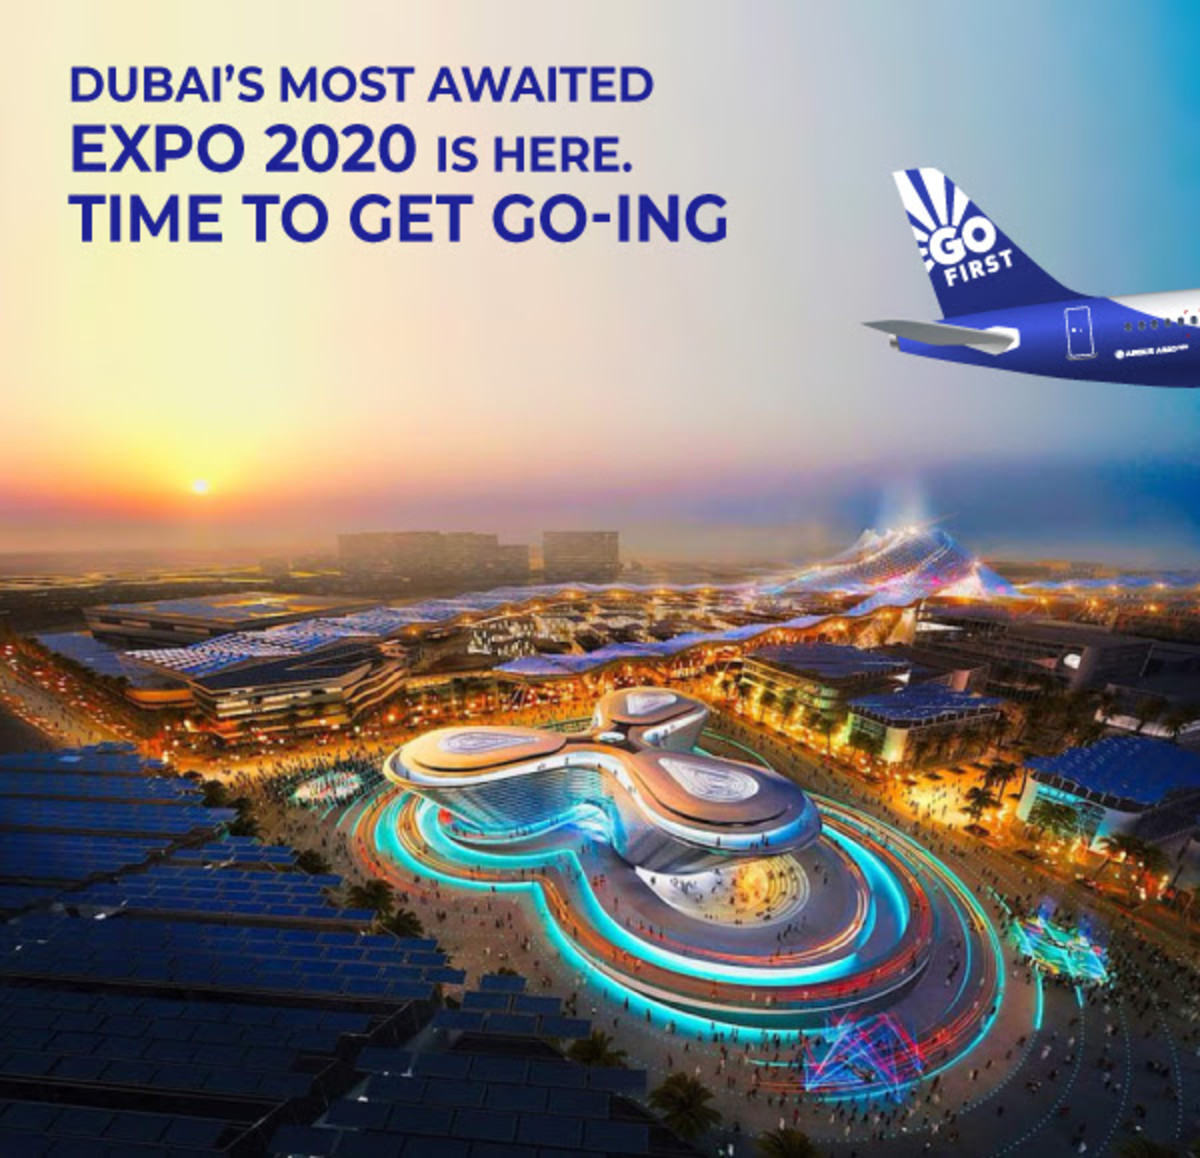 Expo 20 Opens in Dubai